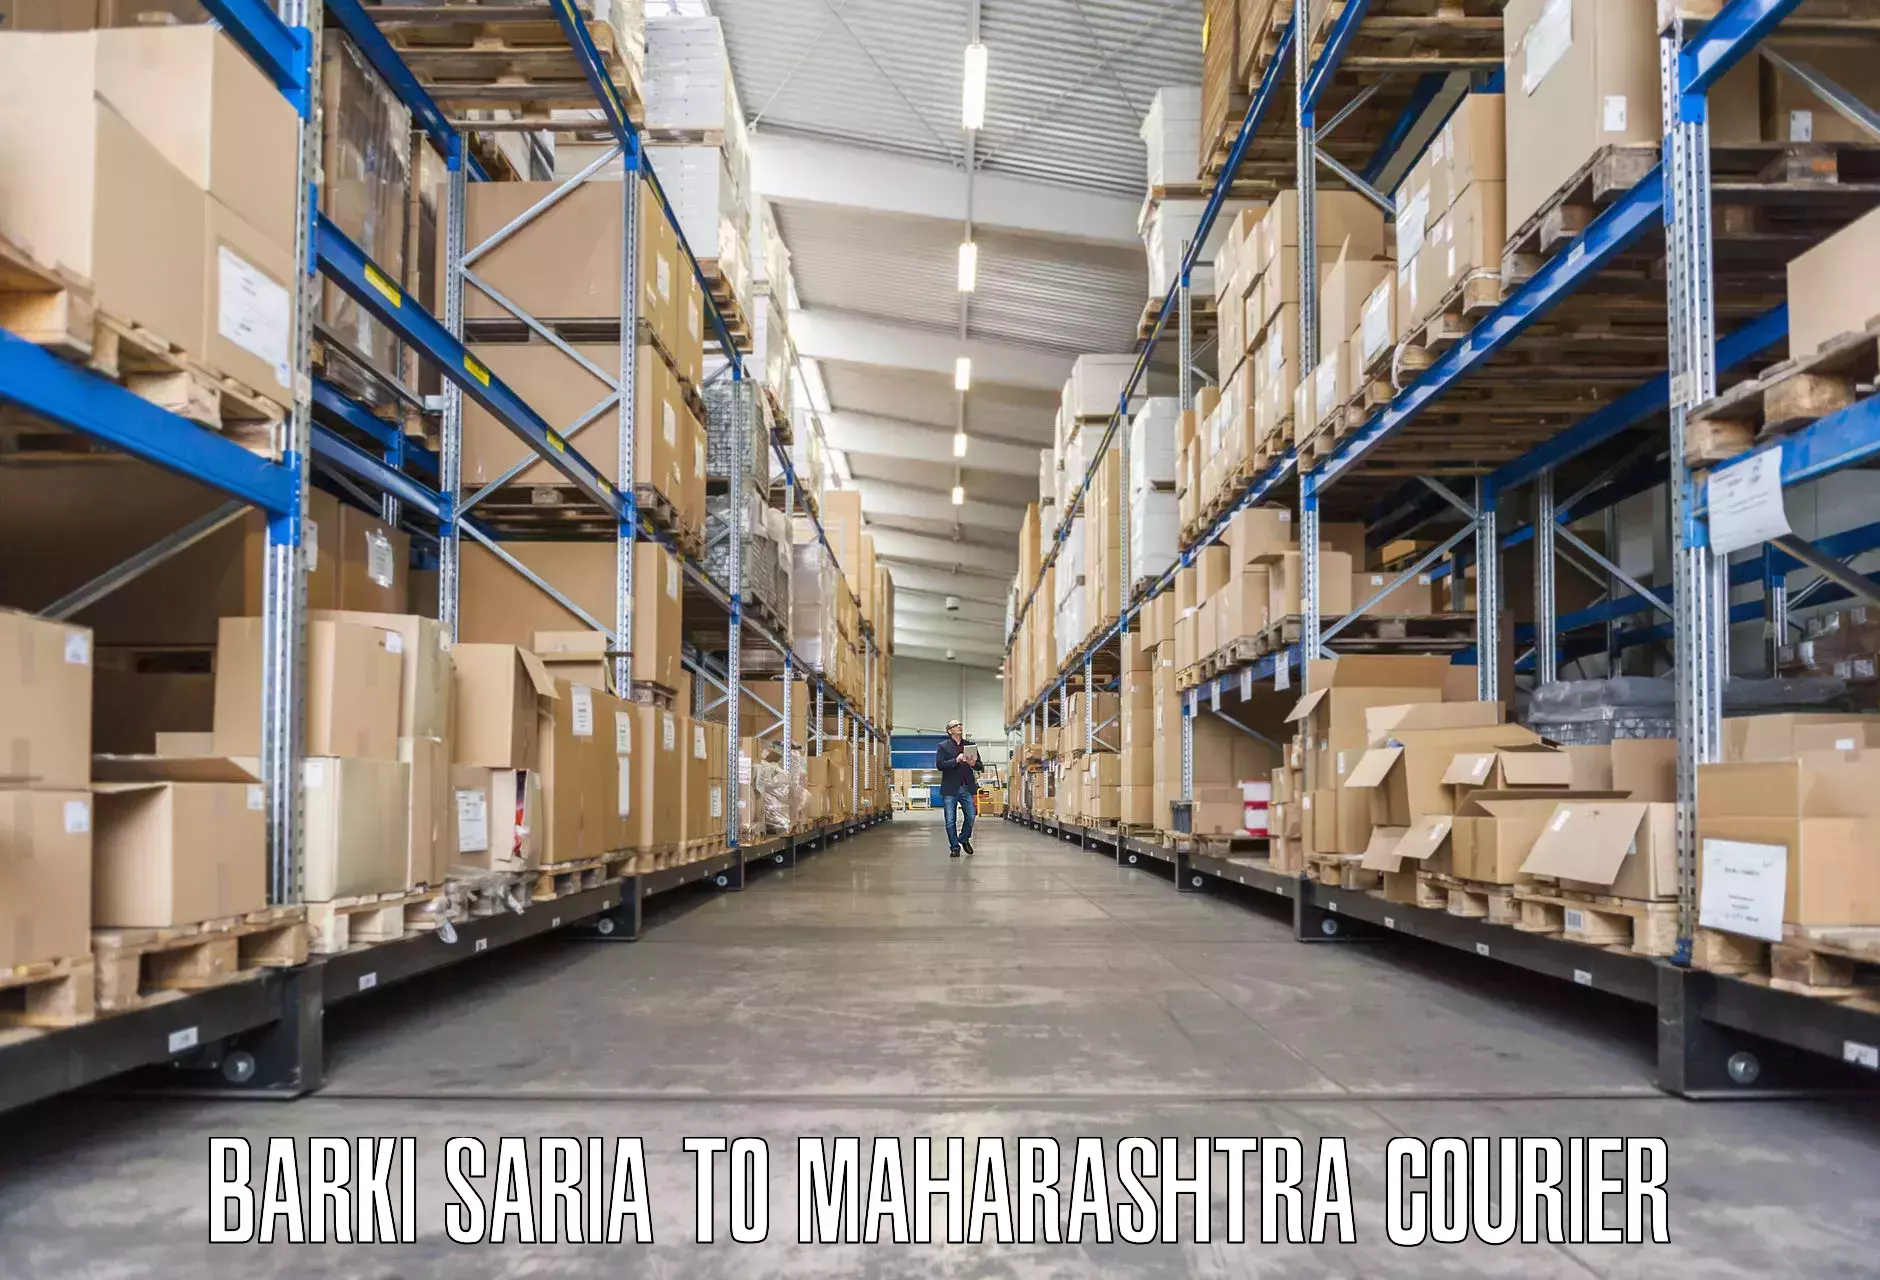 High-quality moving services Barki Saria to Maharashtra